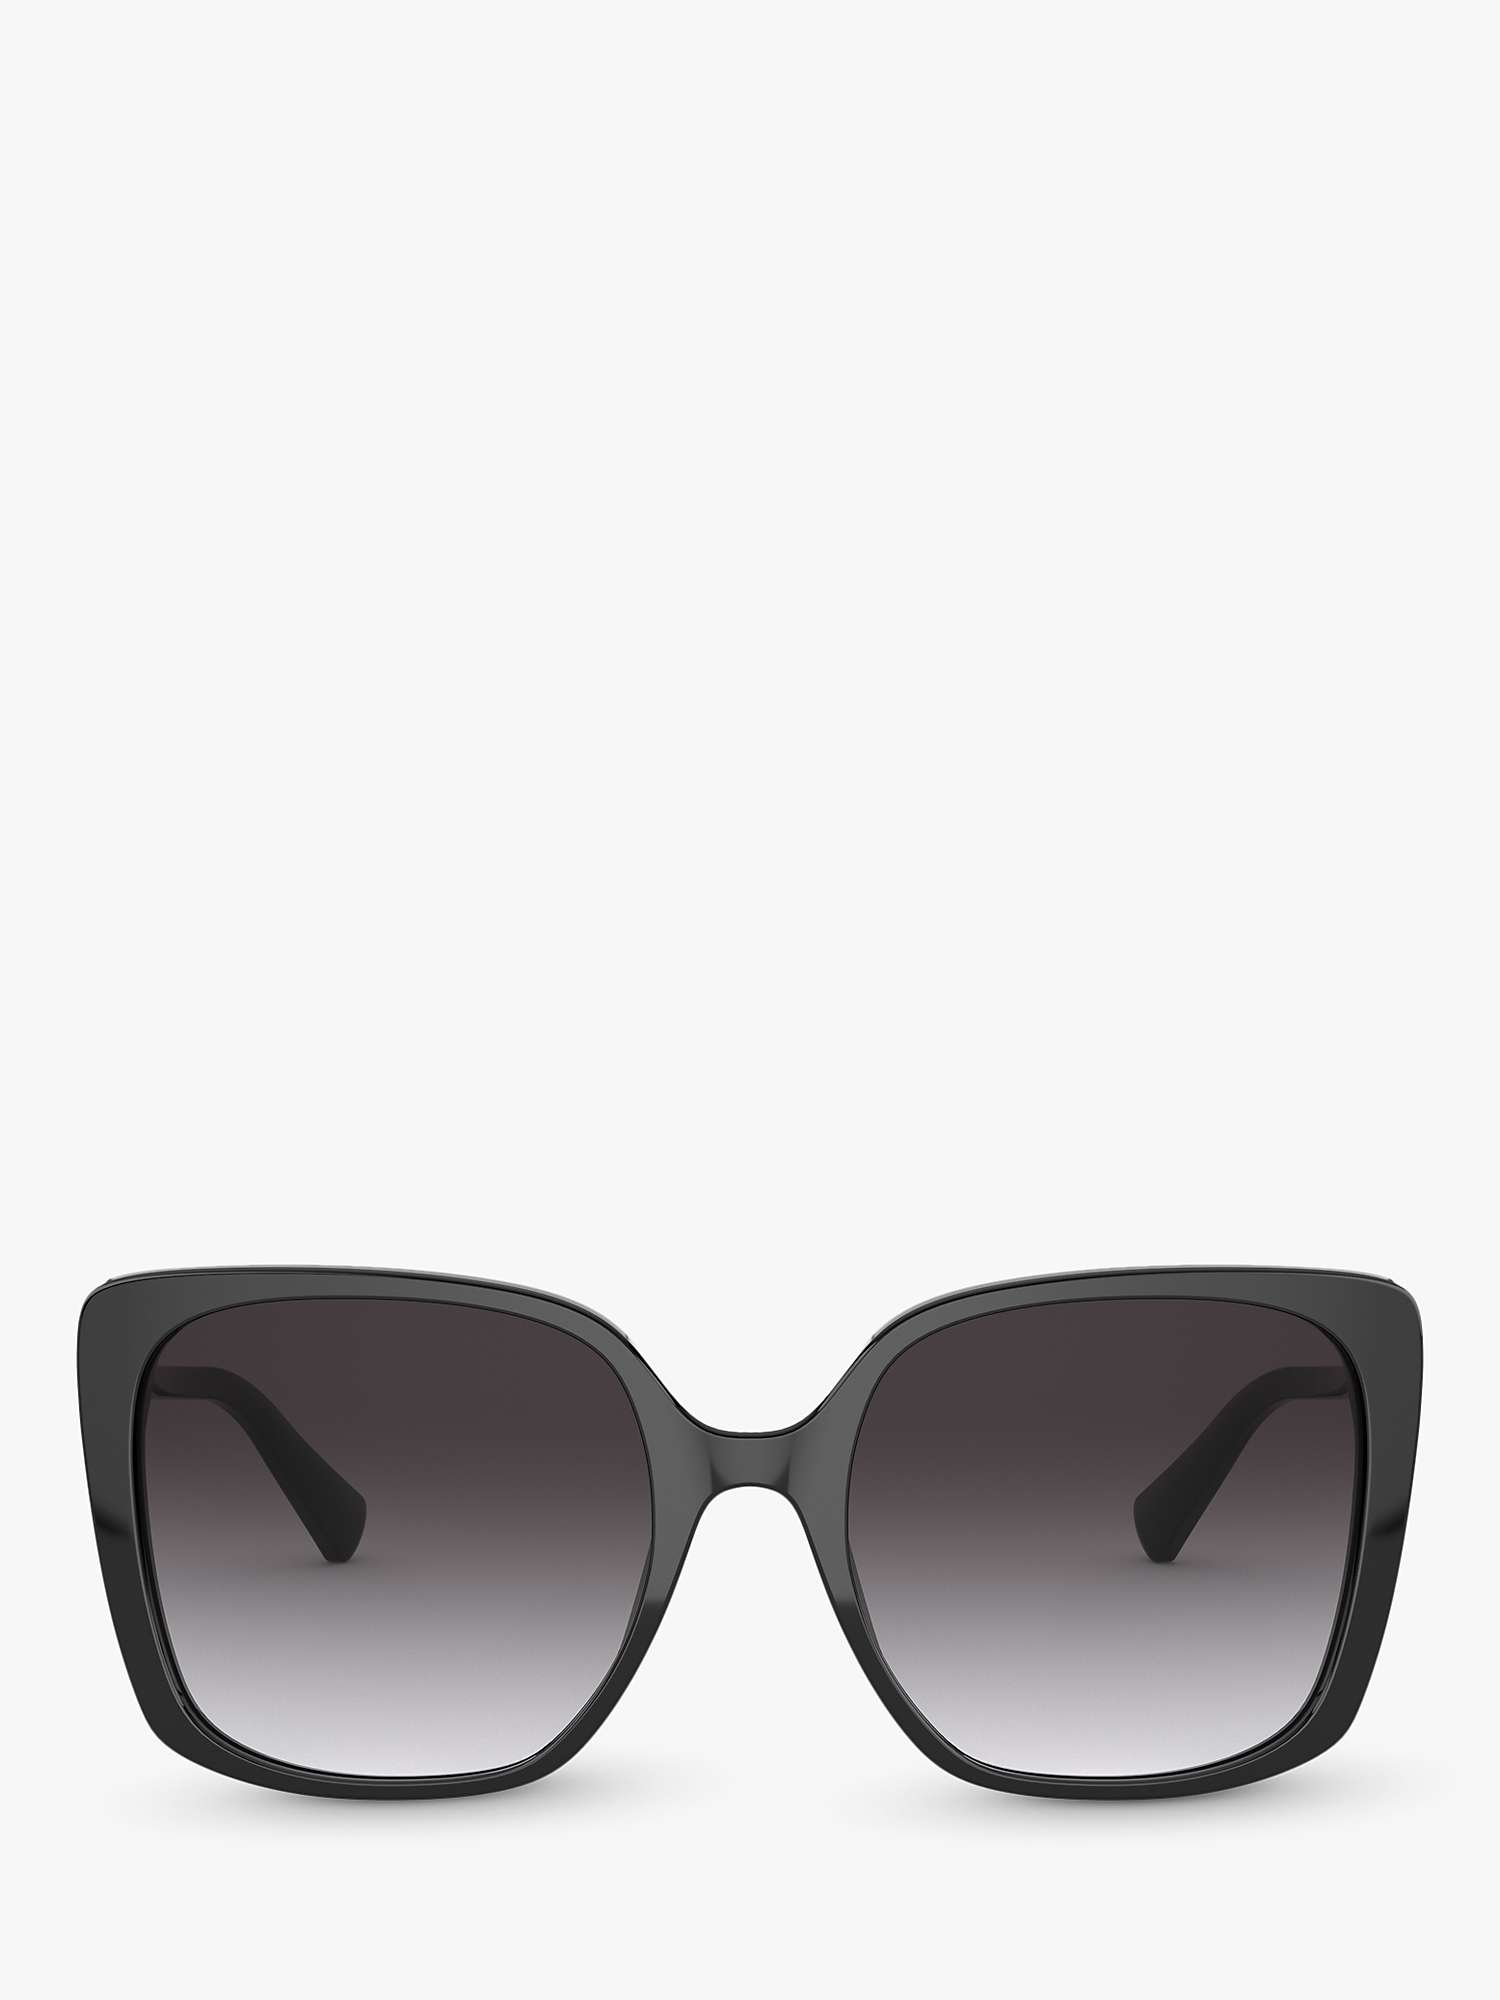 Buy BVLGARI BV8225B Women's Square Sunglasses, Black Online at johnlewis.com